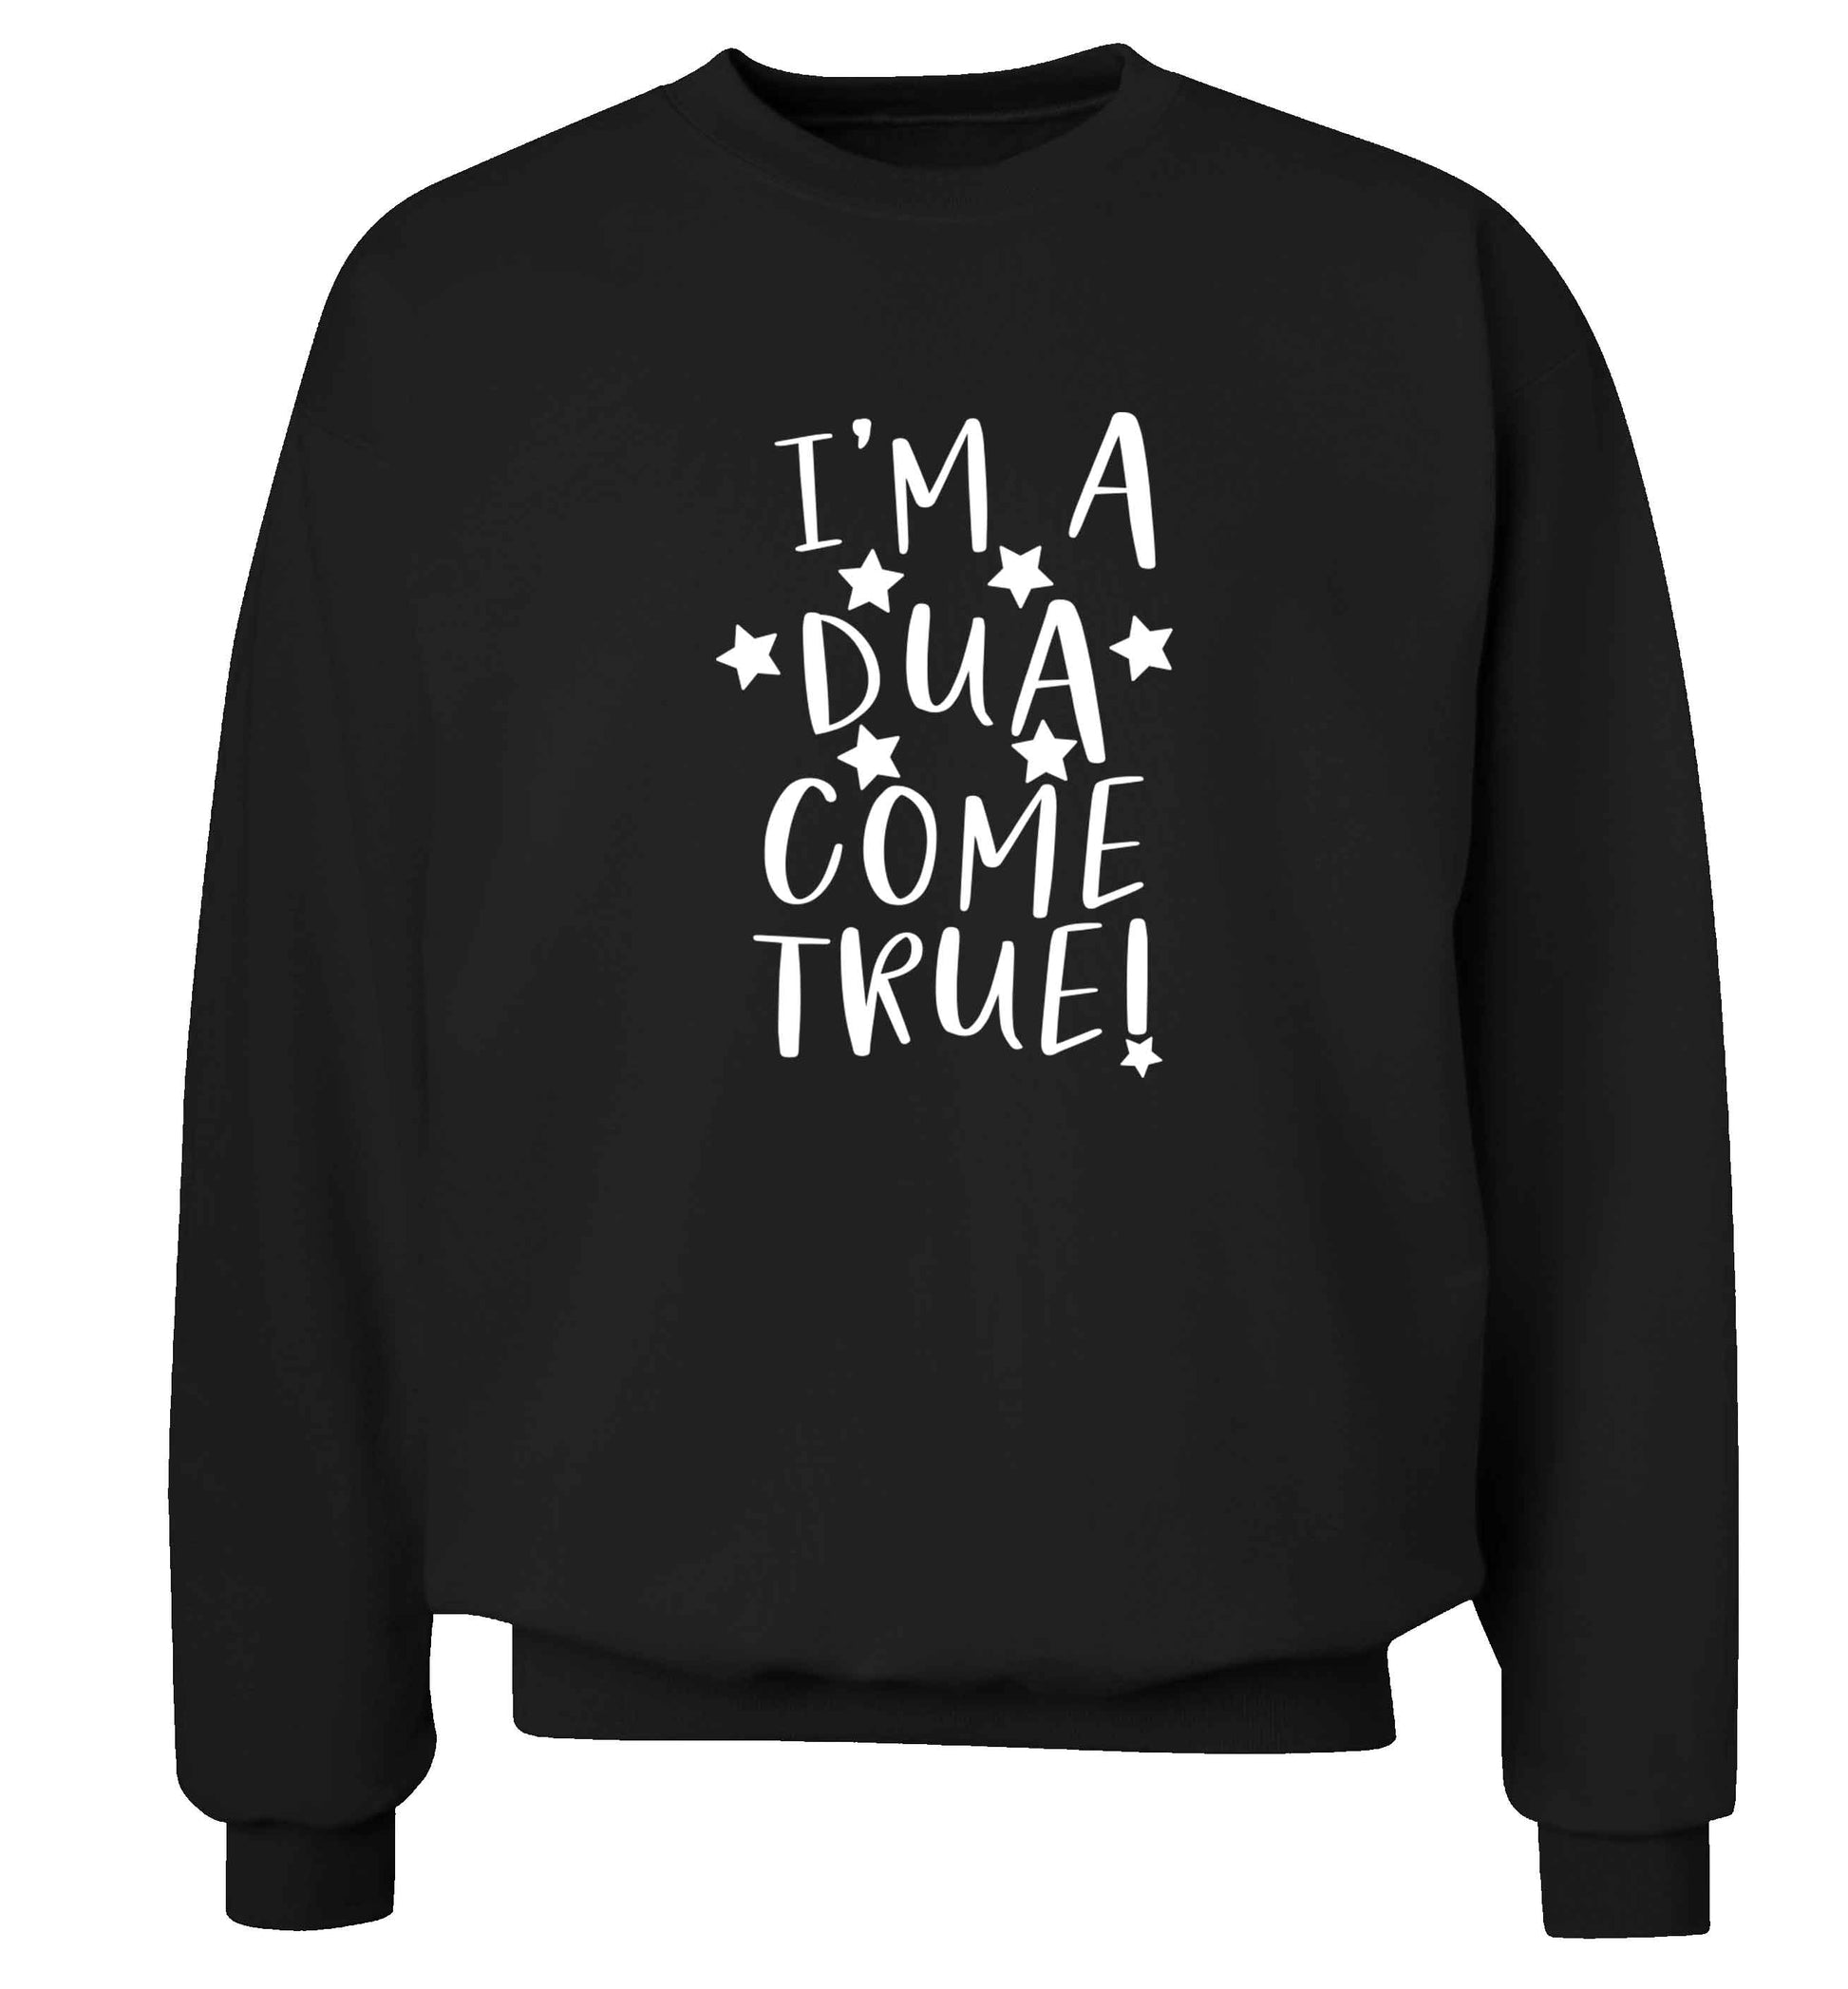 I'm a dua come true adult's unisex black sweater 2XL